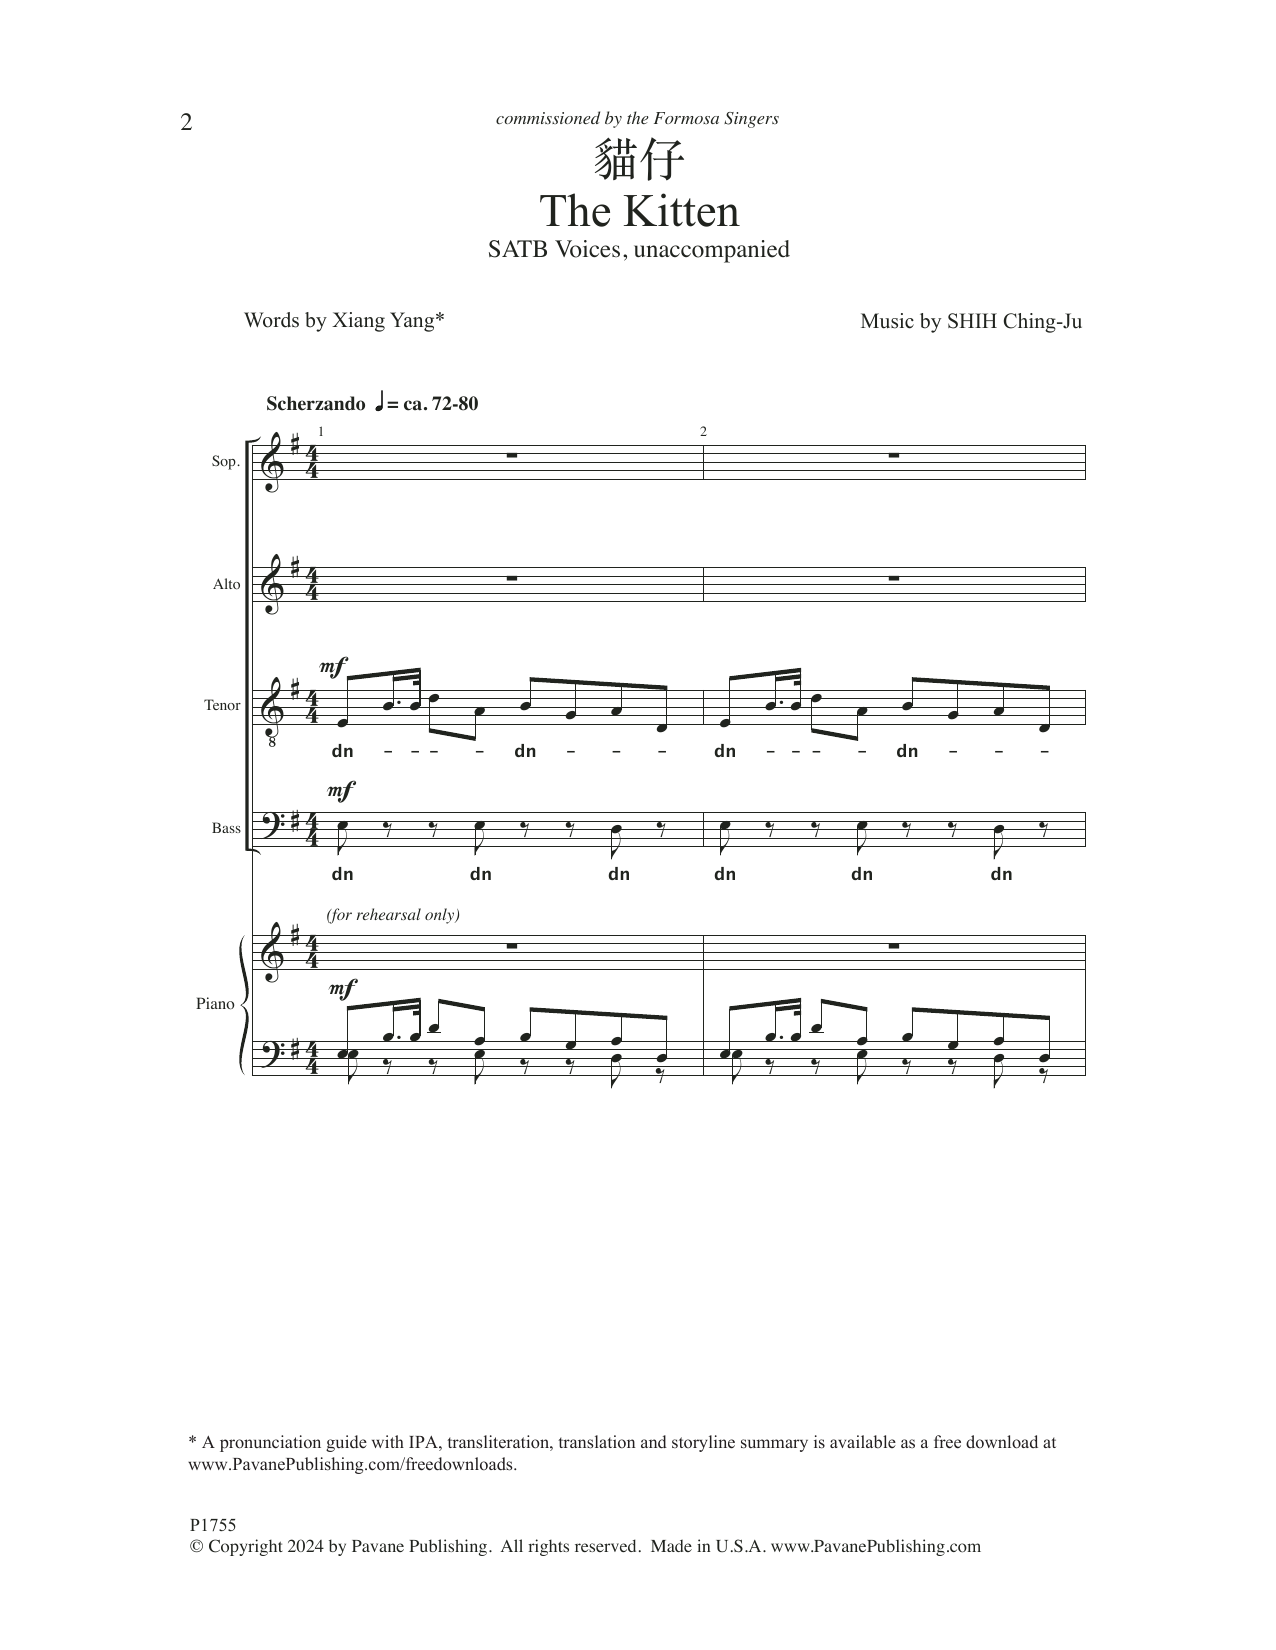 Shih Ching-Ju The Kitten Sheet Music Notes & Chords for SATB Choir - Download or Print PDF